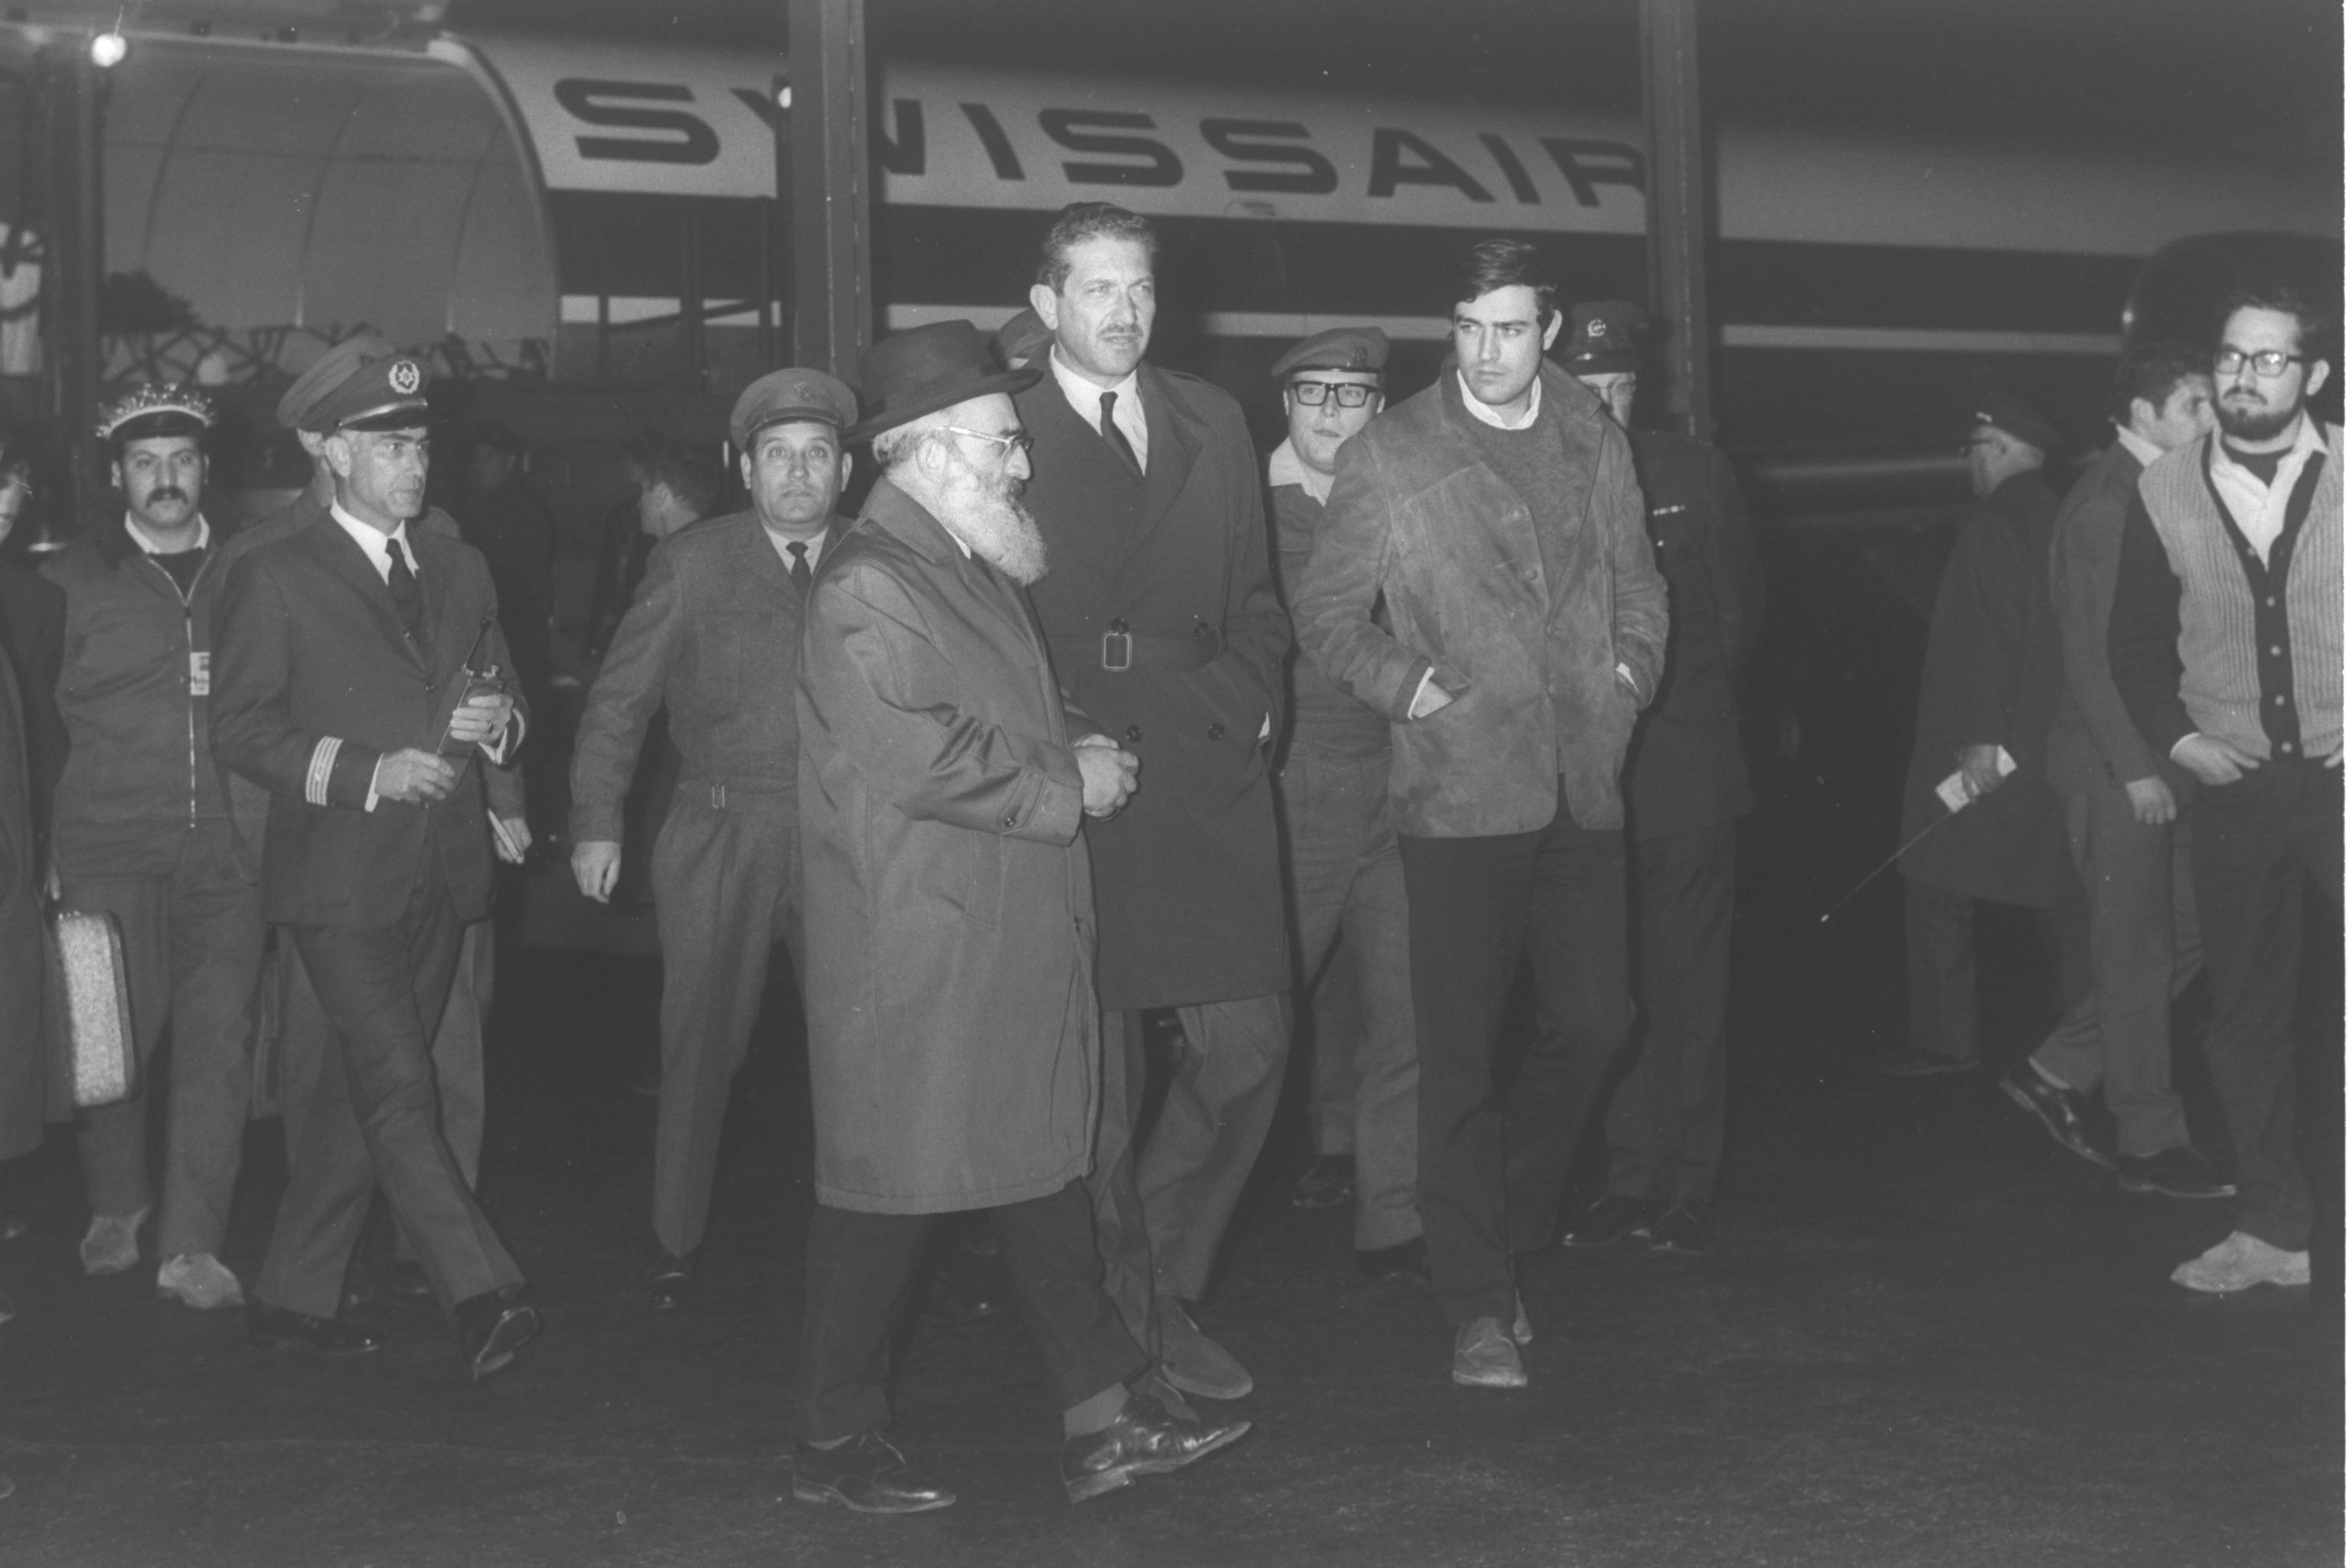 <p>שר התחבורה ויצמן מוסר לרב שלמה גורן, את הארון עם שרידי הקורבנות בפיצוץ במטוס סוויסאייר, נתב"ג, 2.3.1970. צילום: משה מילנר, אוסף התצלומים הלאומי.</p>
<p>&nbsp;</p>